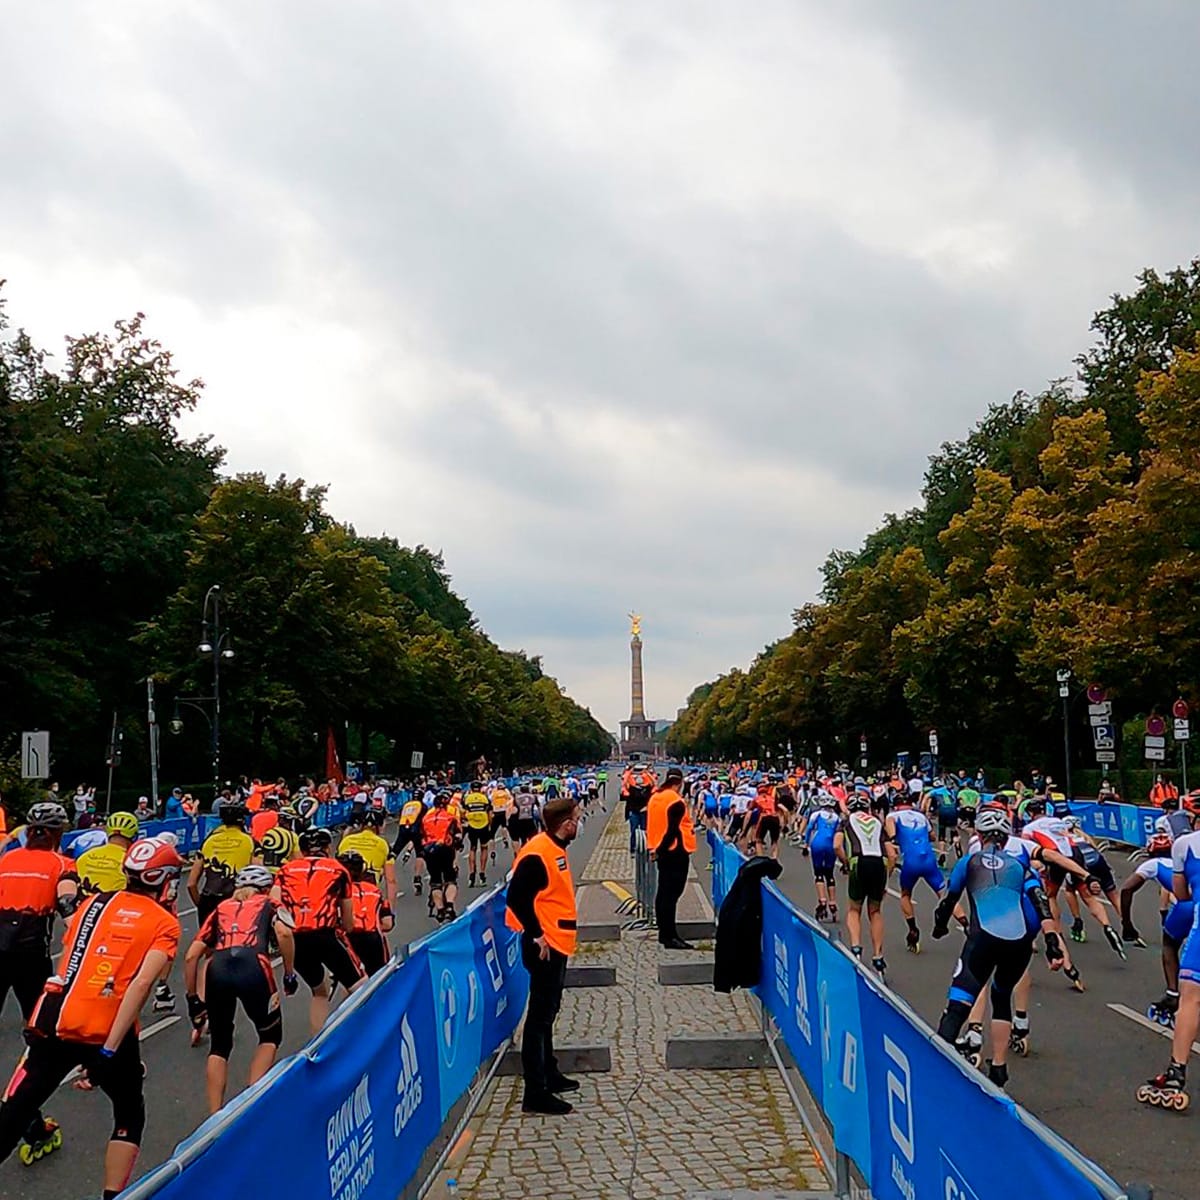 Départ du marathon roller de Berlin 2021